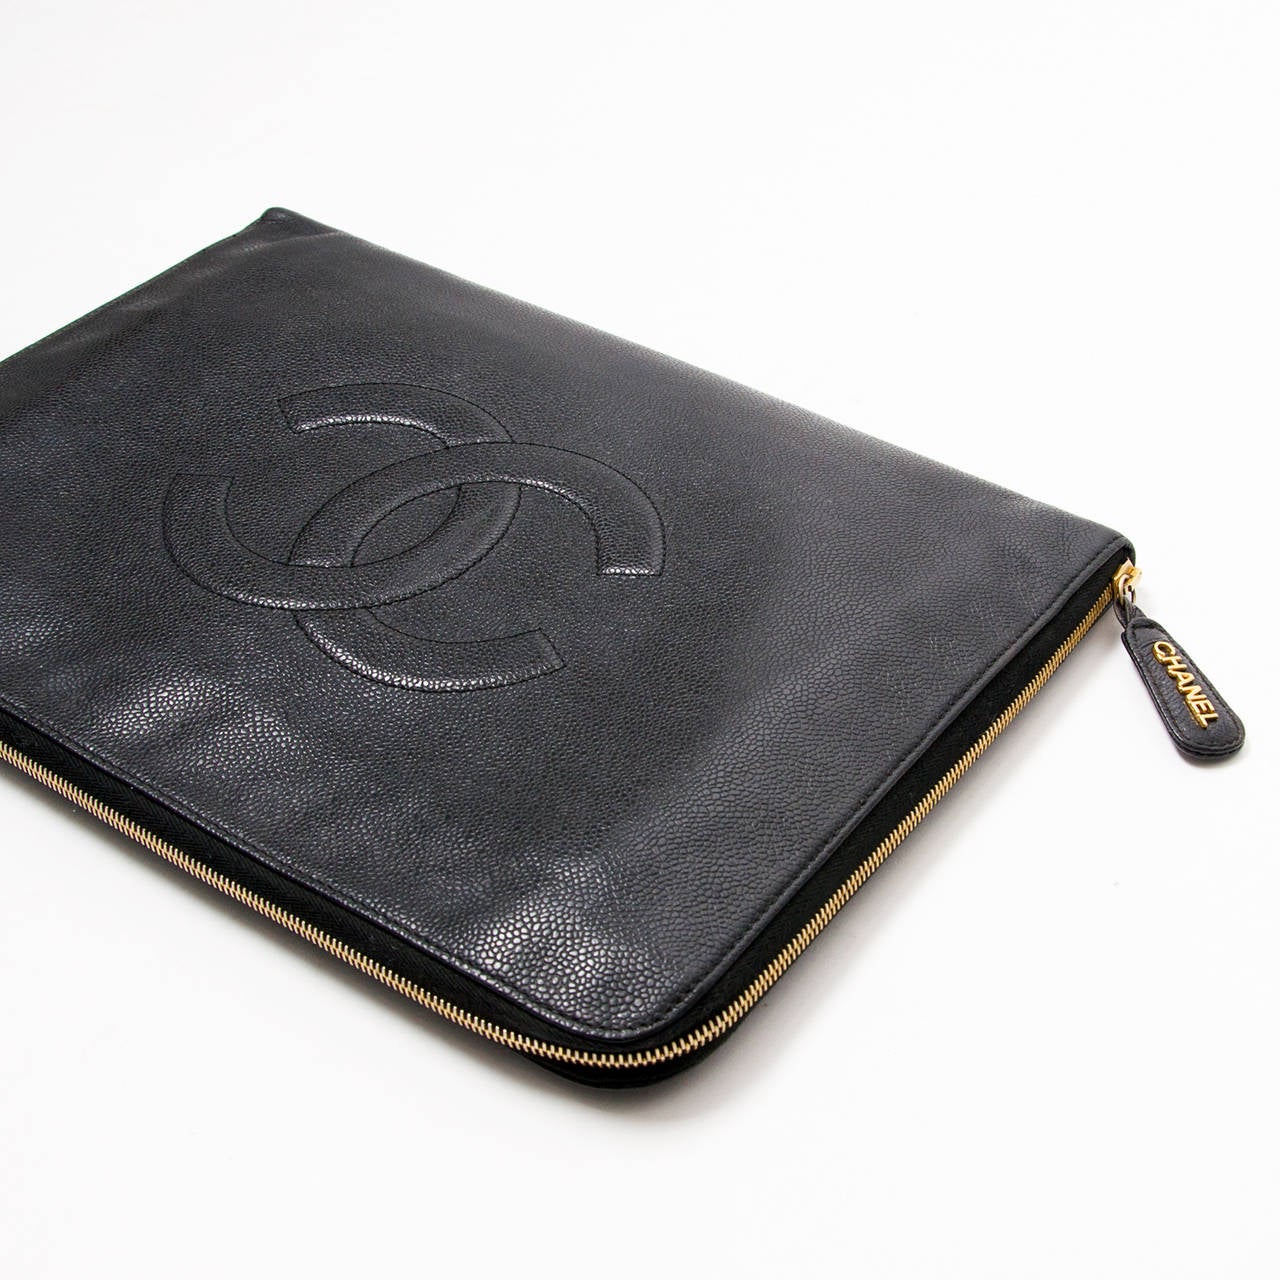 Chanel vintage black caviar briefcase clutch with golden hardware. 
Golden zipper closure. Inside 2 compartments.